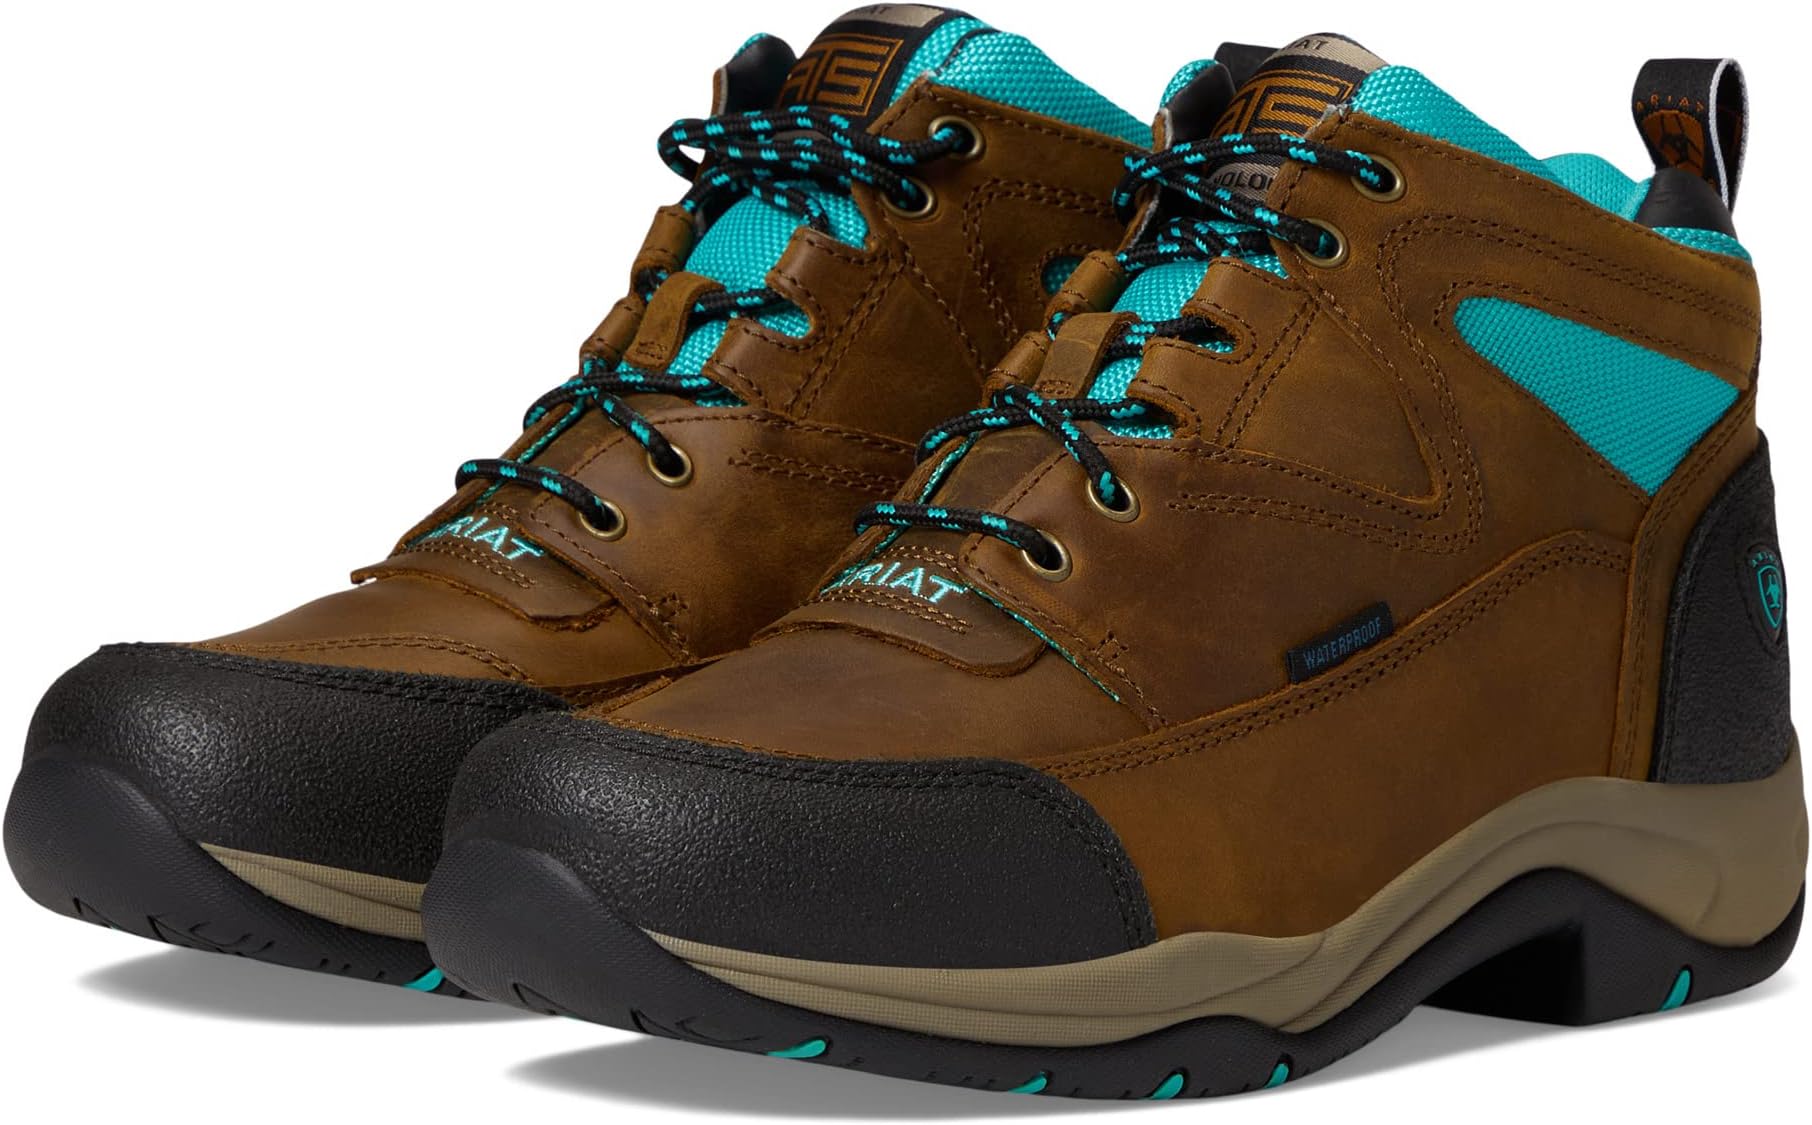 Походная обувь водонепроницаемая Terrain Waterproof Boot Ariat, цвет Weathered Brown/Turquoise коврик homium home 2шт turquoise grey brown set2mat05